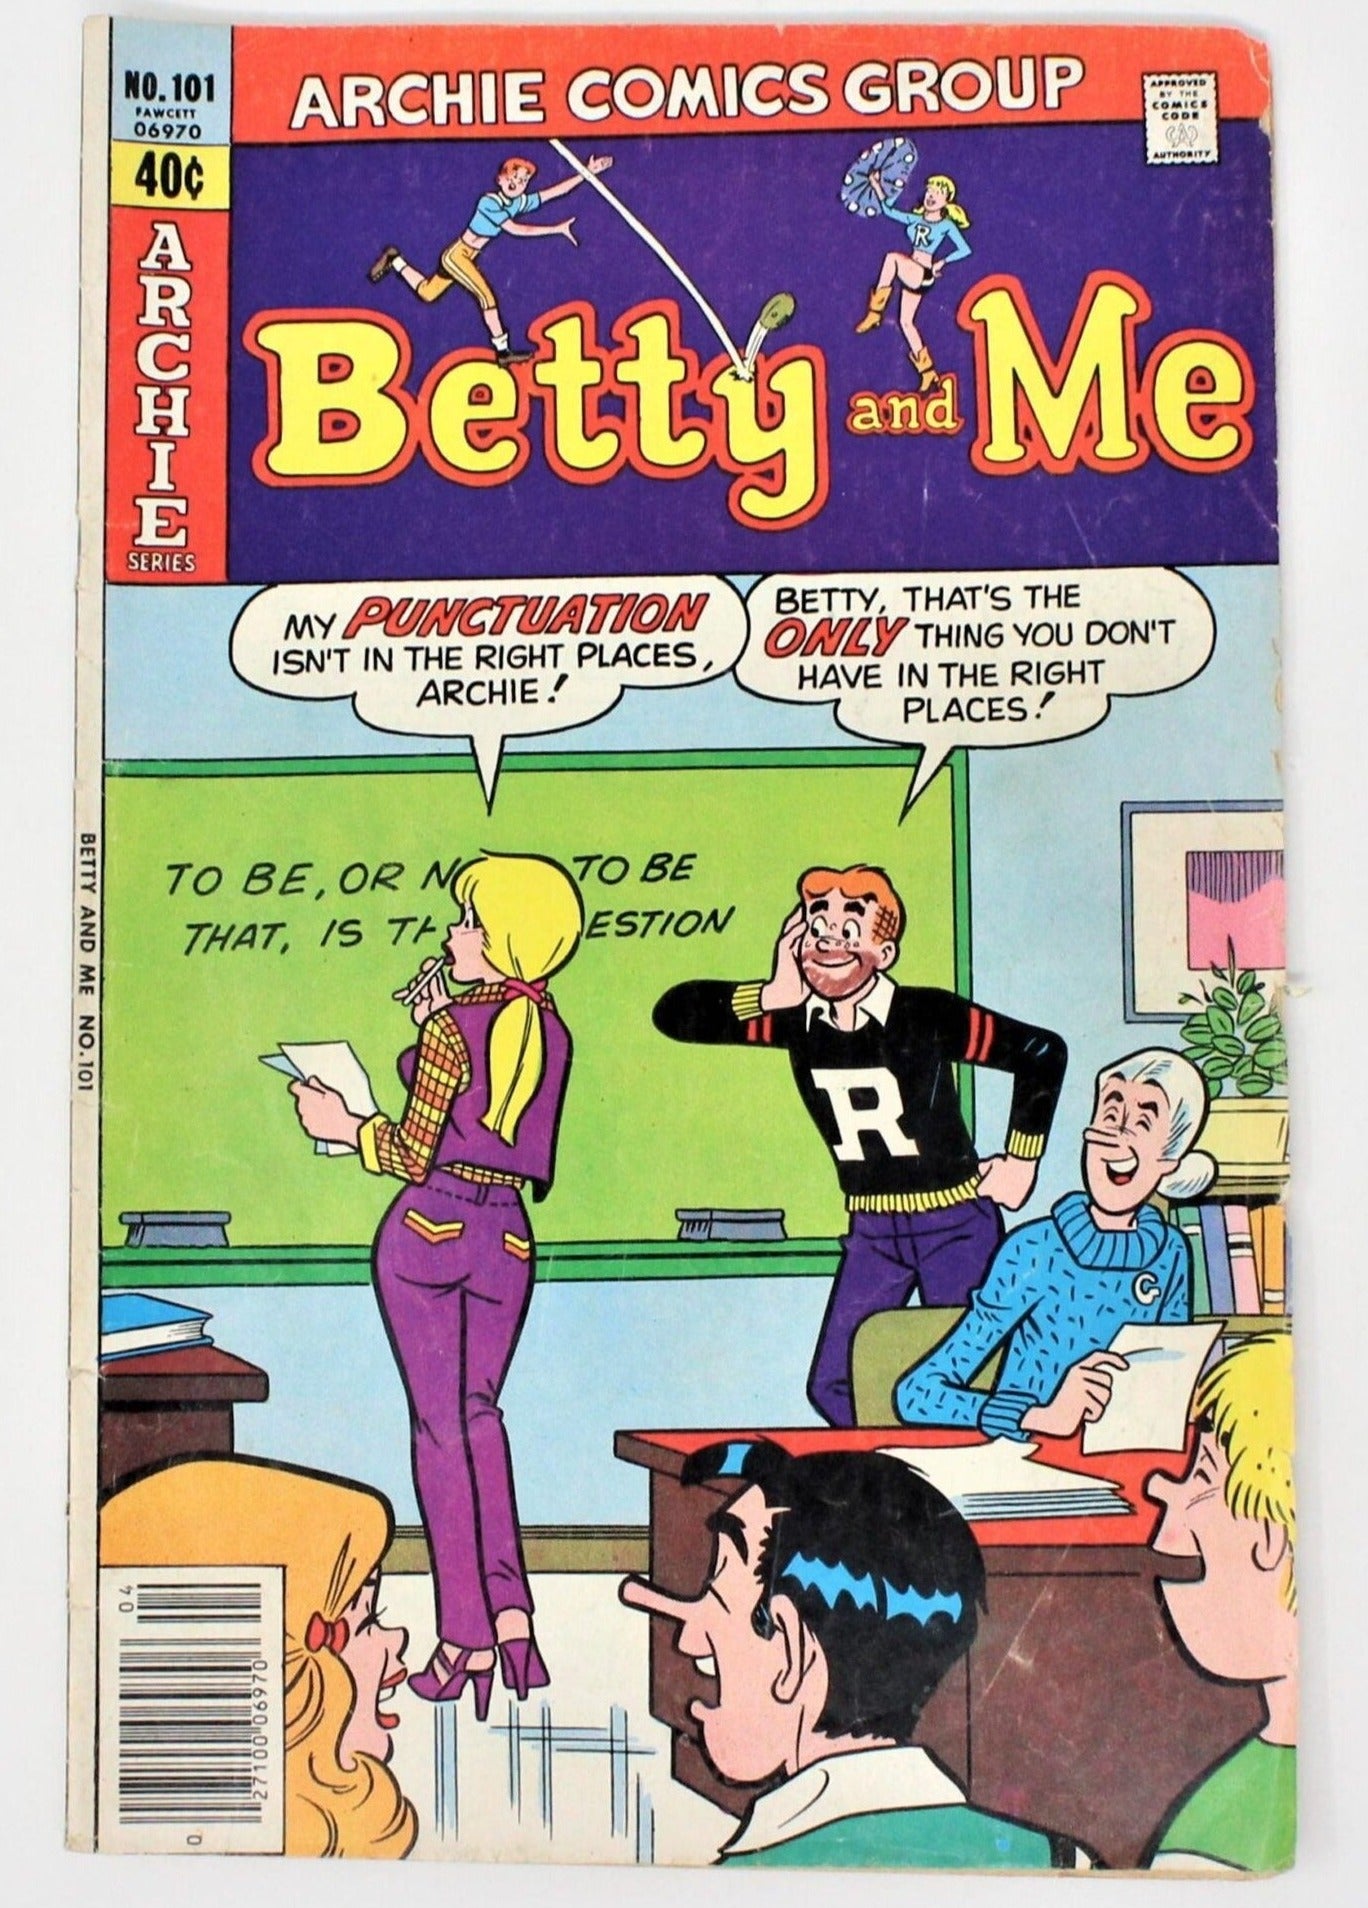 Buy BETTY & VERONICA POWER UPS POP ART VARIANTS now! – Stadium Comics